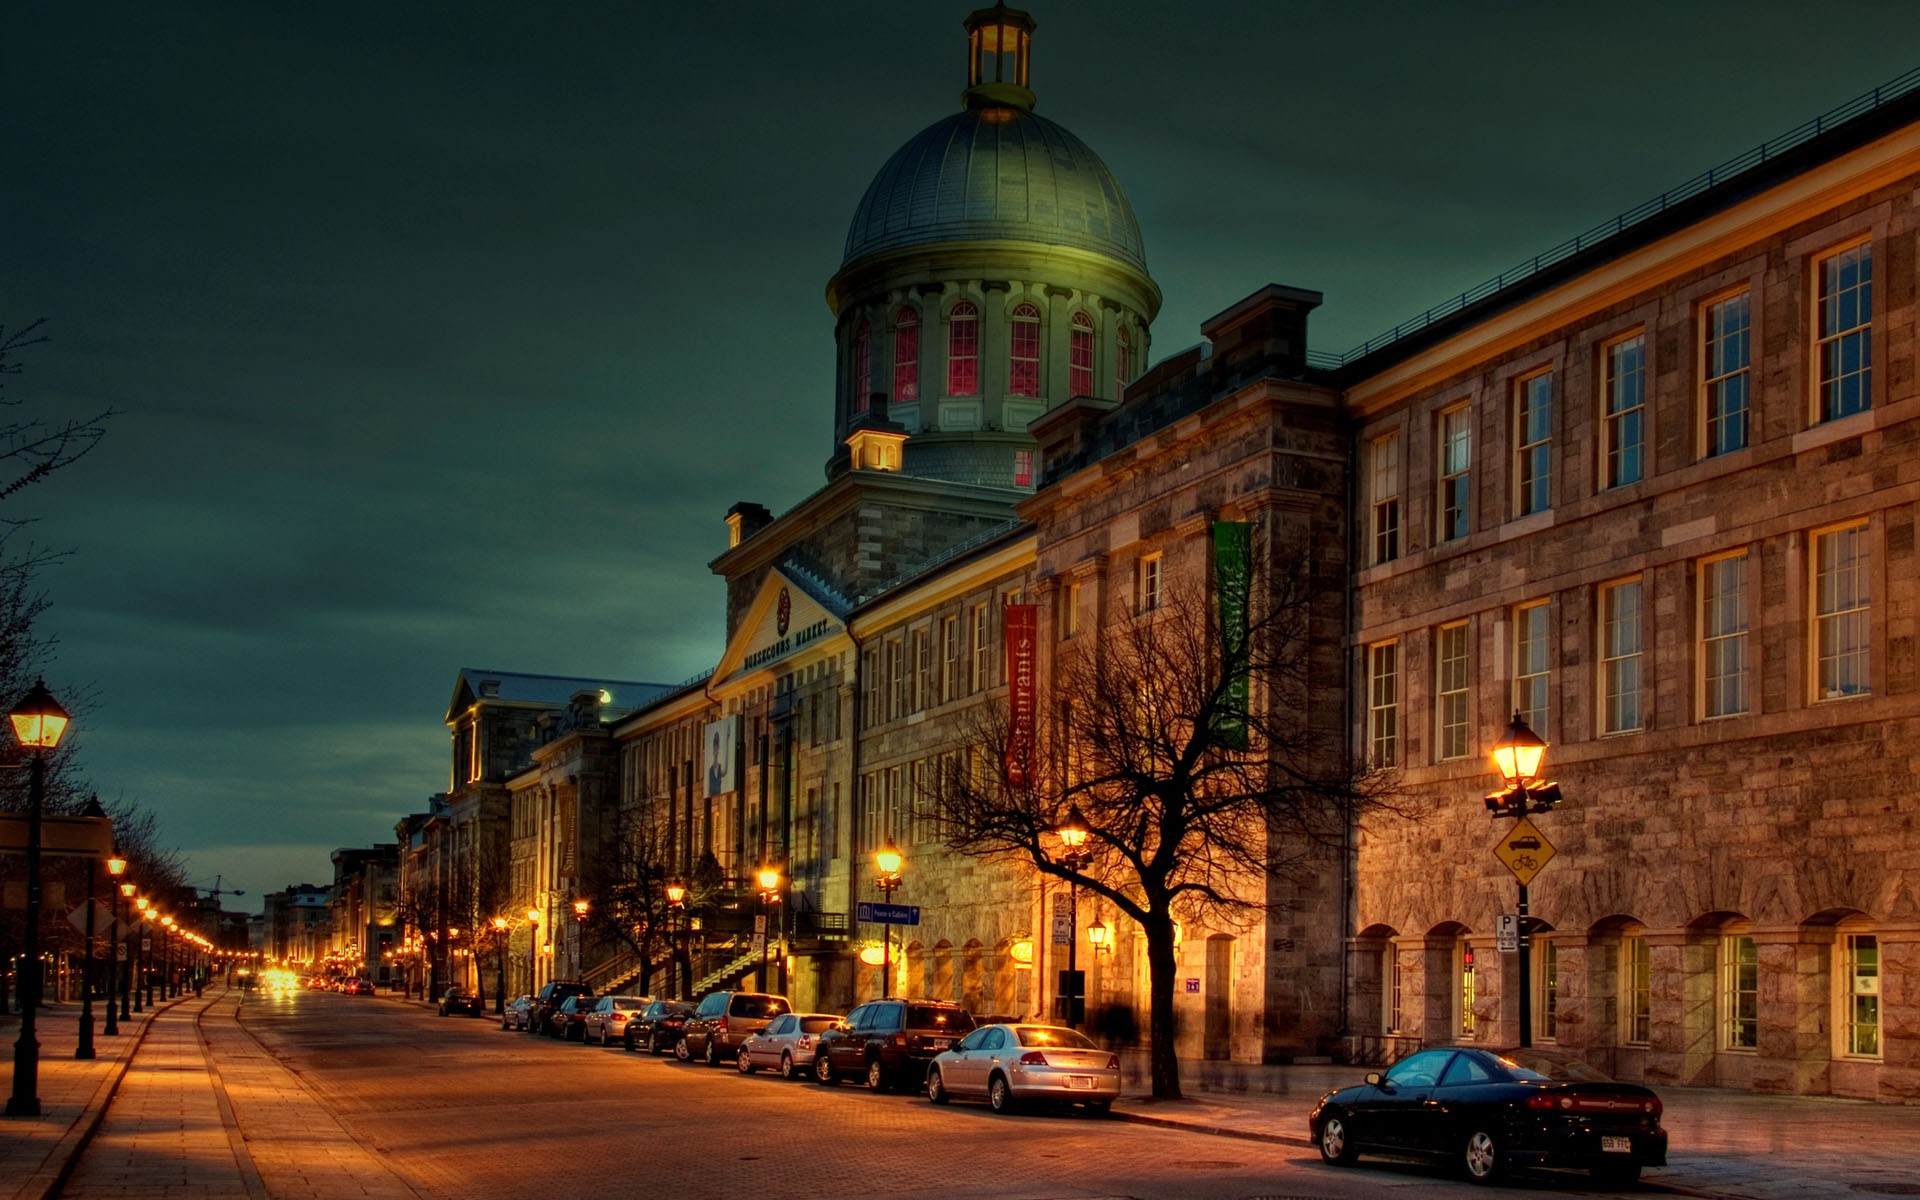 Montreal, HDR photography, cities - desktop wallpaper